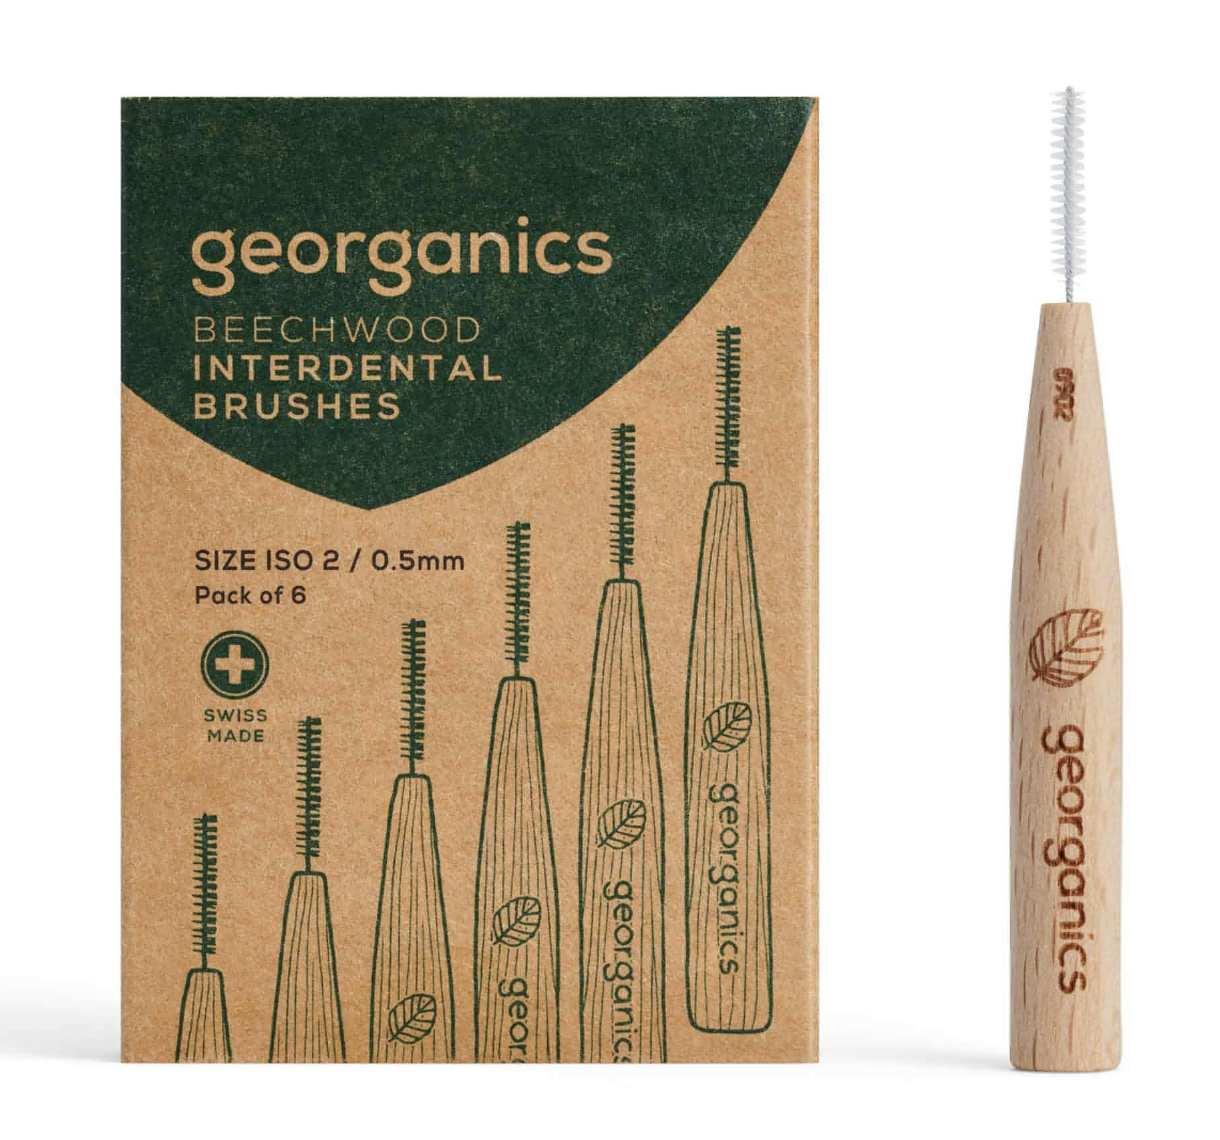 Georganics Beechwood Interdental 6 Brushes review and promo code